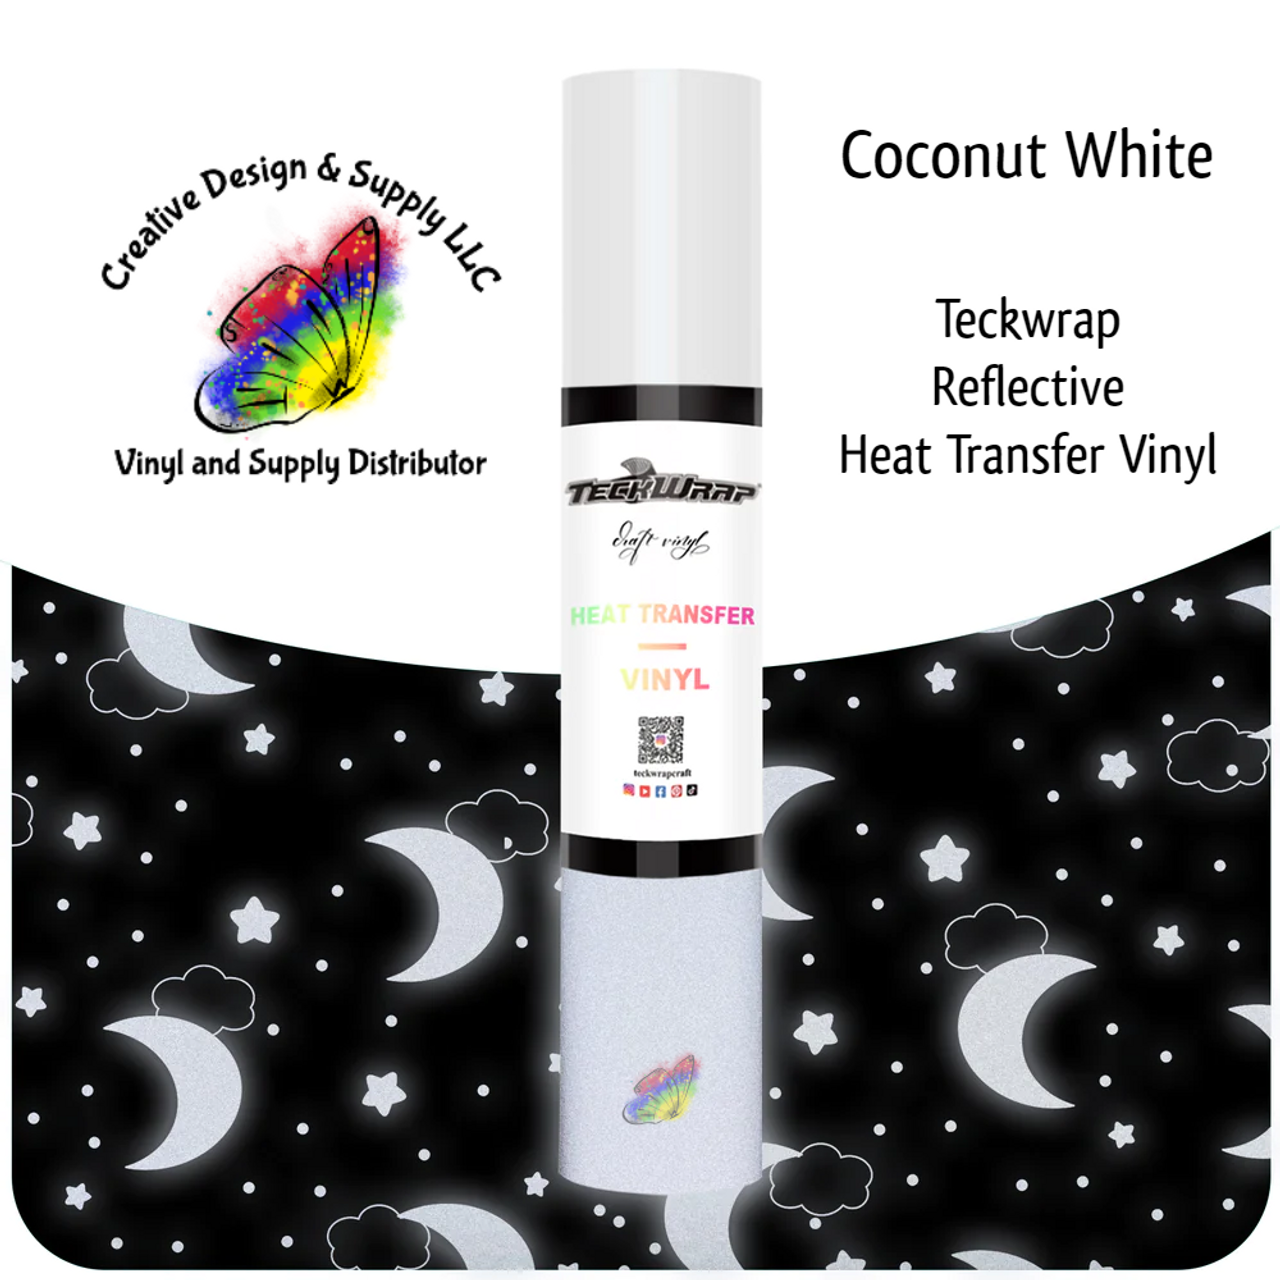 Teckwrap Reflective HTV | Coconut White